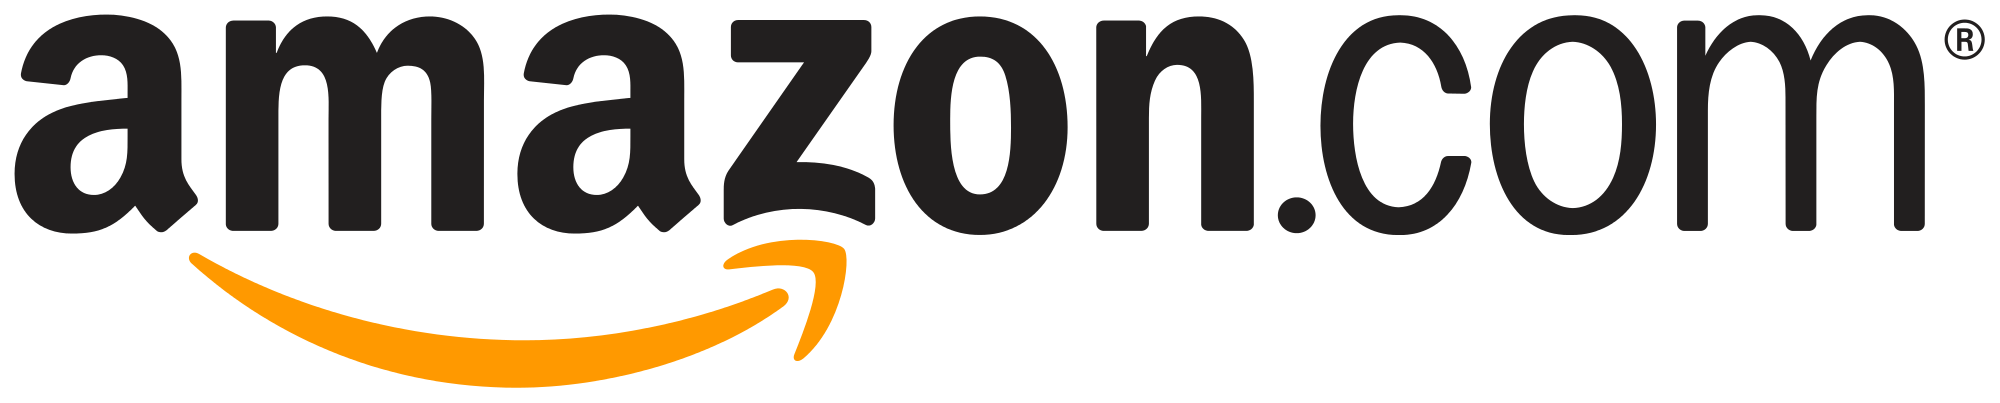 Amoazon Logo - Amazon Logo transparent PNG